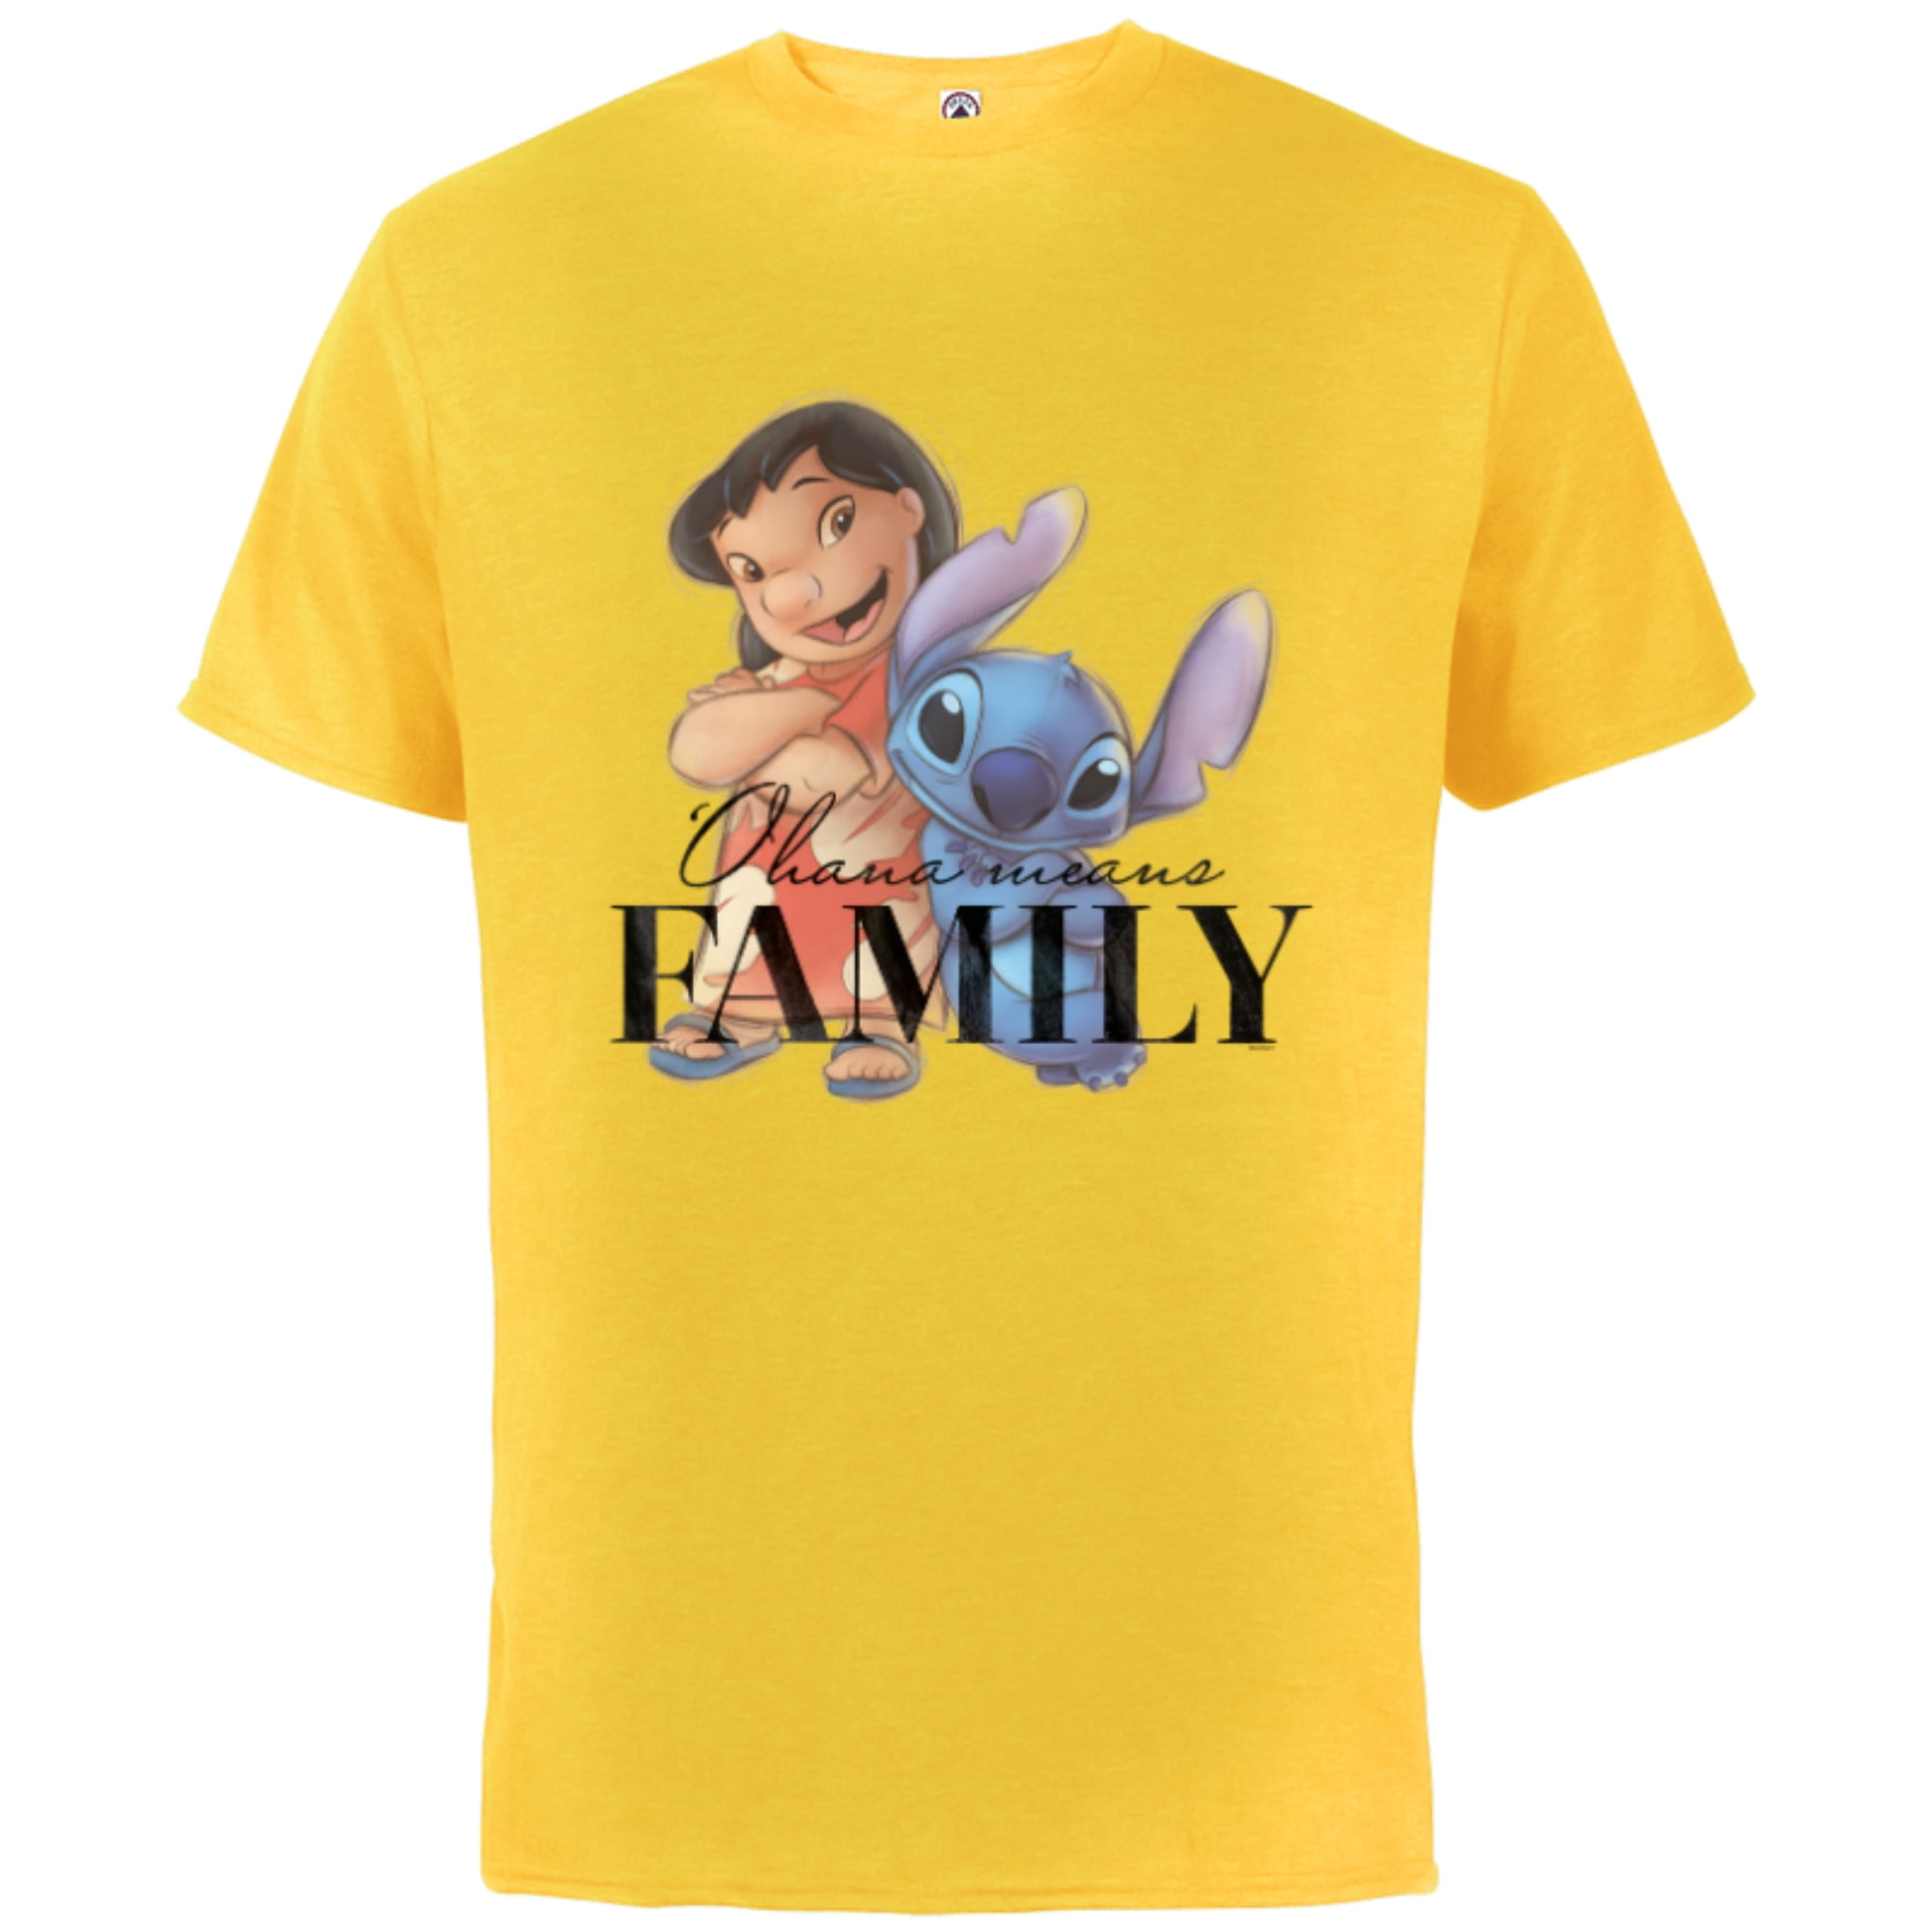 Stitch and Scrump Shirt, Stitch in Costume 101 Dalmatians Shirt, Stitch  Lovers Shirt, Ohana Means Family T Shirt, Disneyland Shirt 